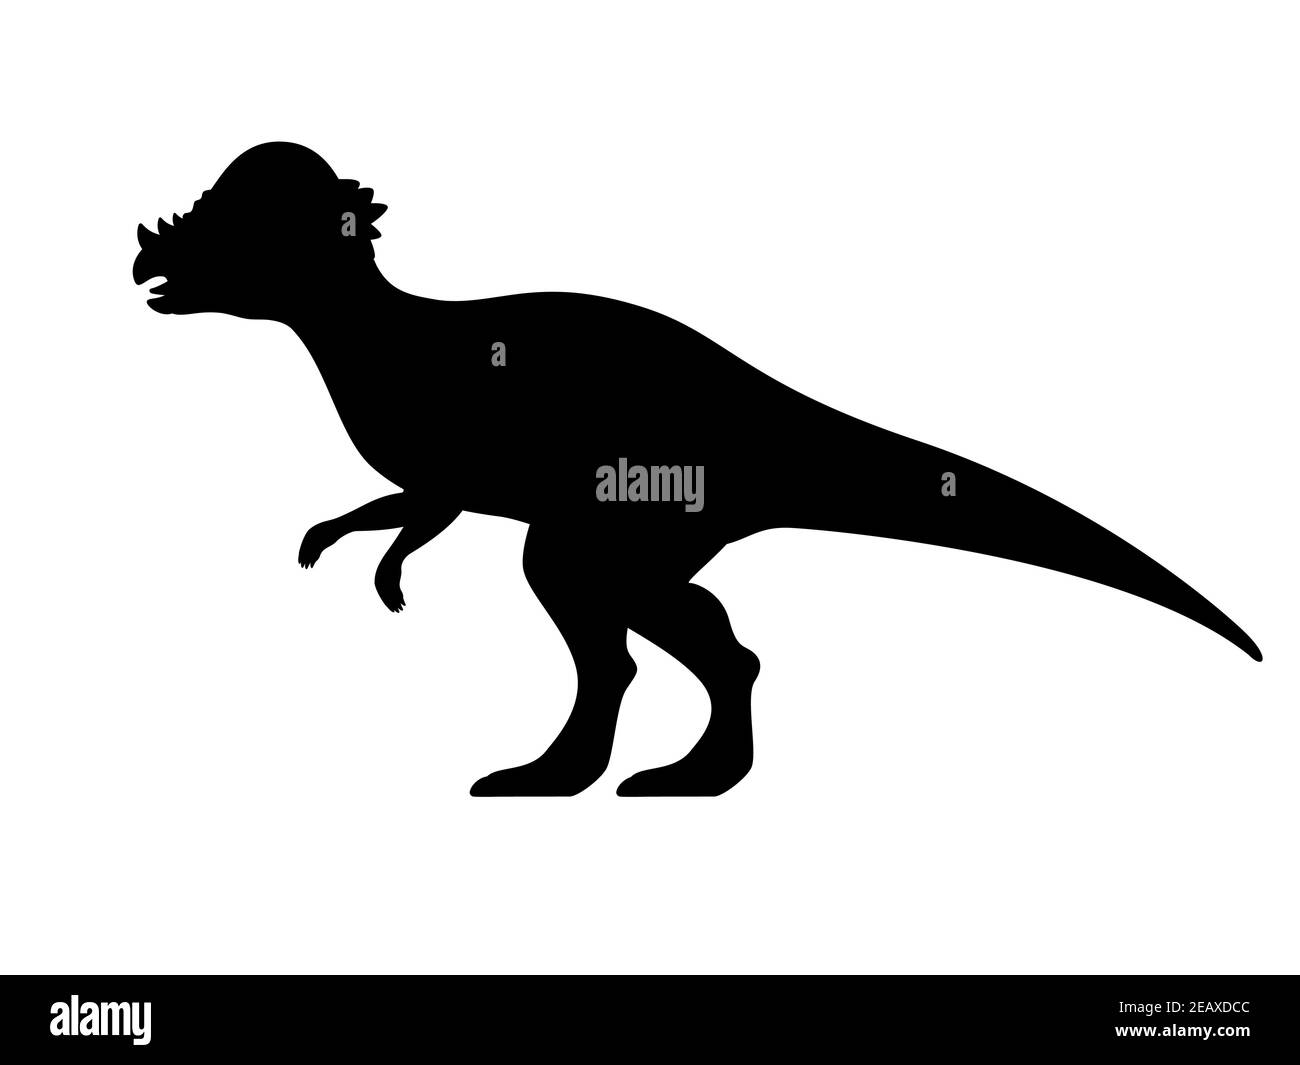 Pachycephalosaurus silhouette. Vector illustration black silhouette pachycephalosaurus dinosaur isolated on white background. Dinosaur logo icon, side Stock Vector